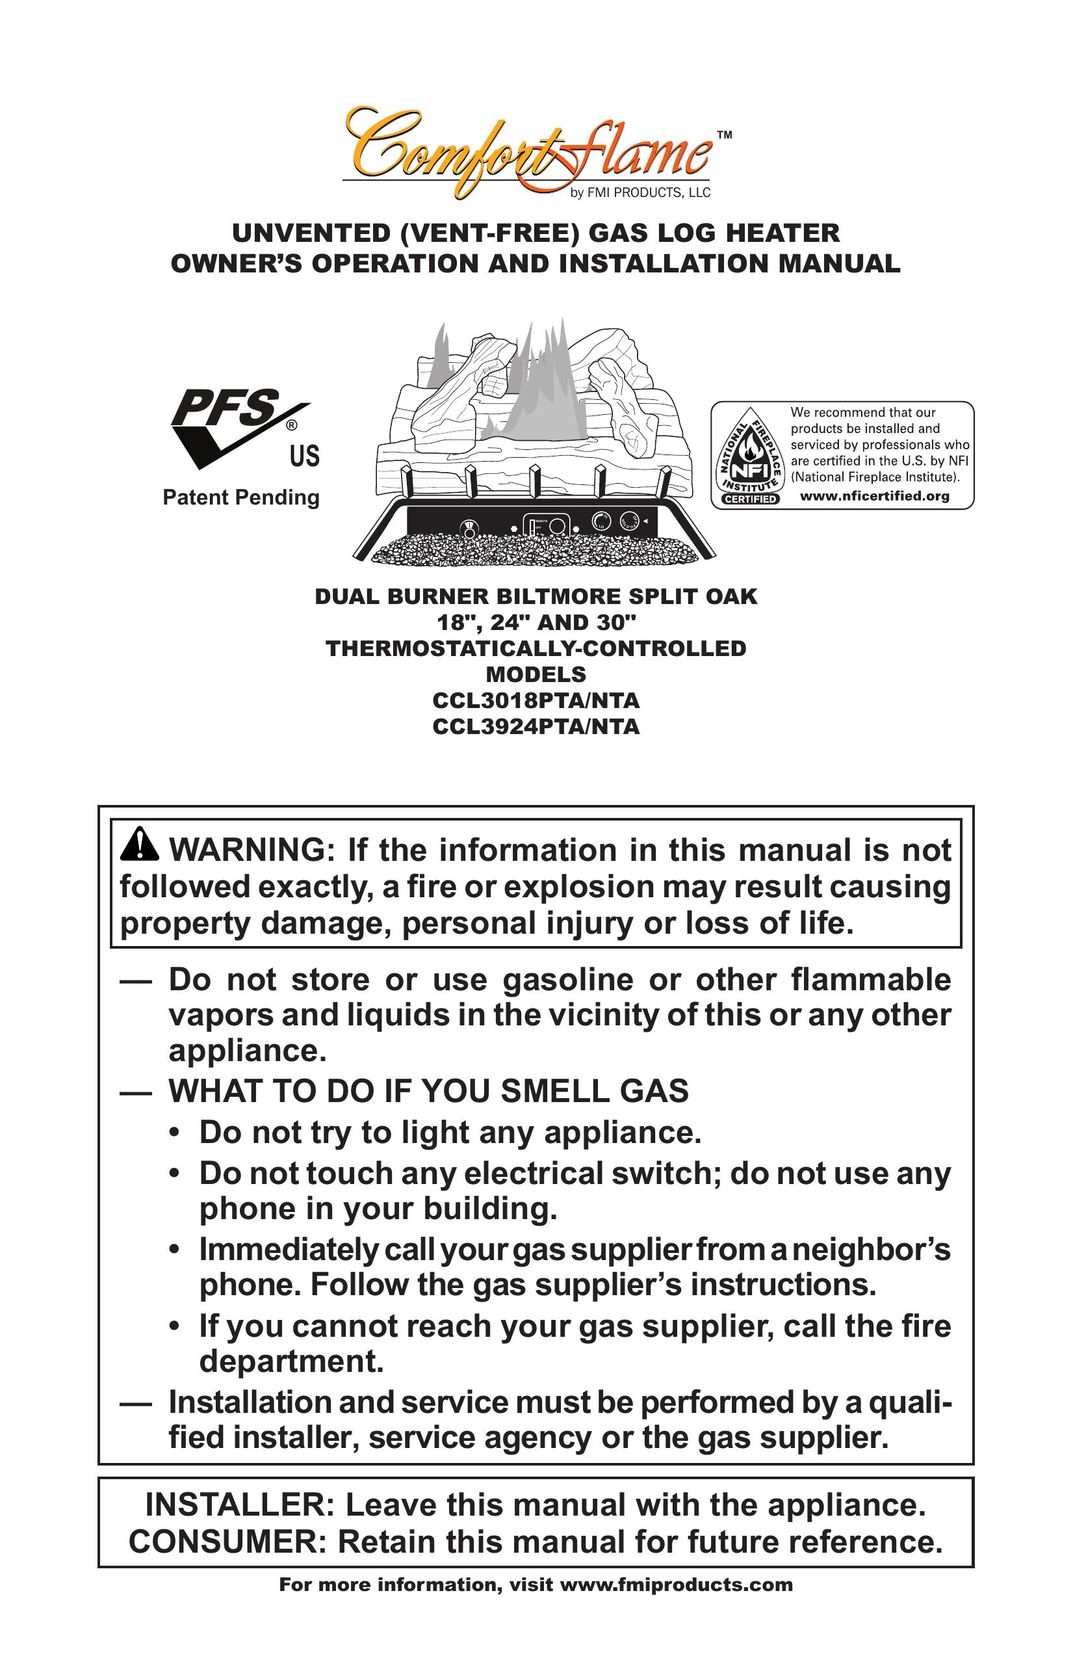 FMI CCL3924PTA/NTA Gas Heater User Manual